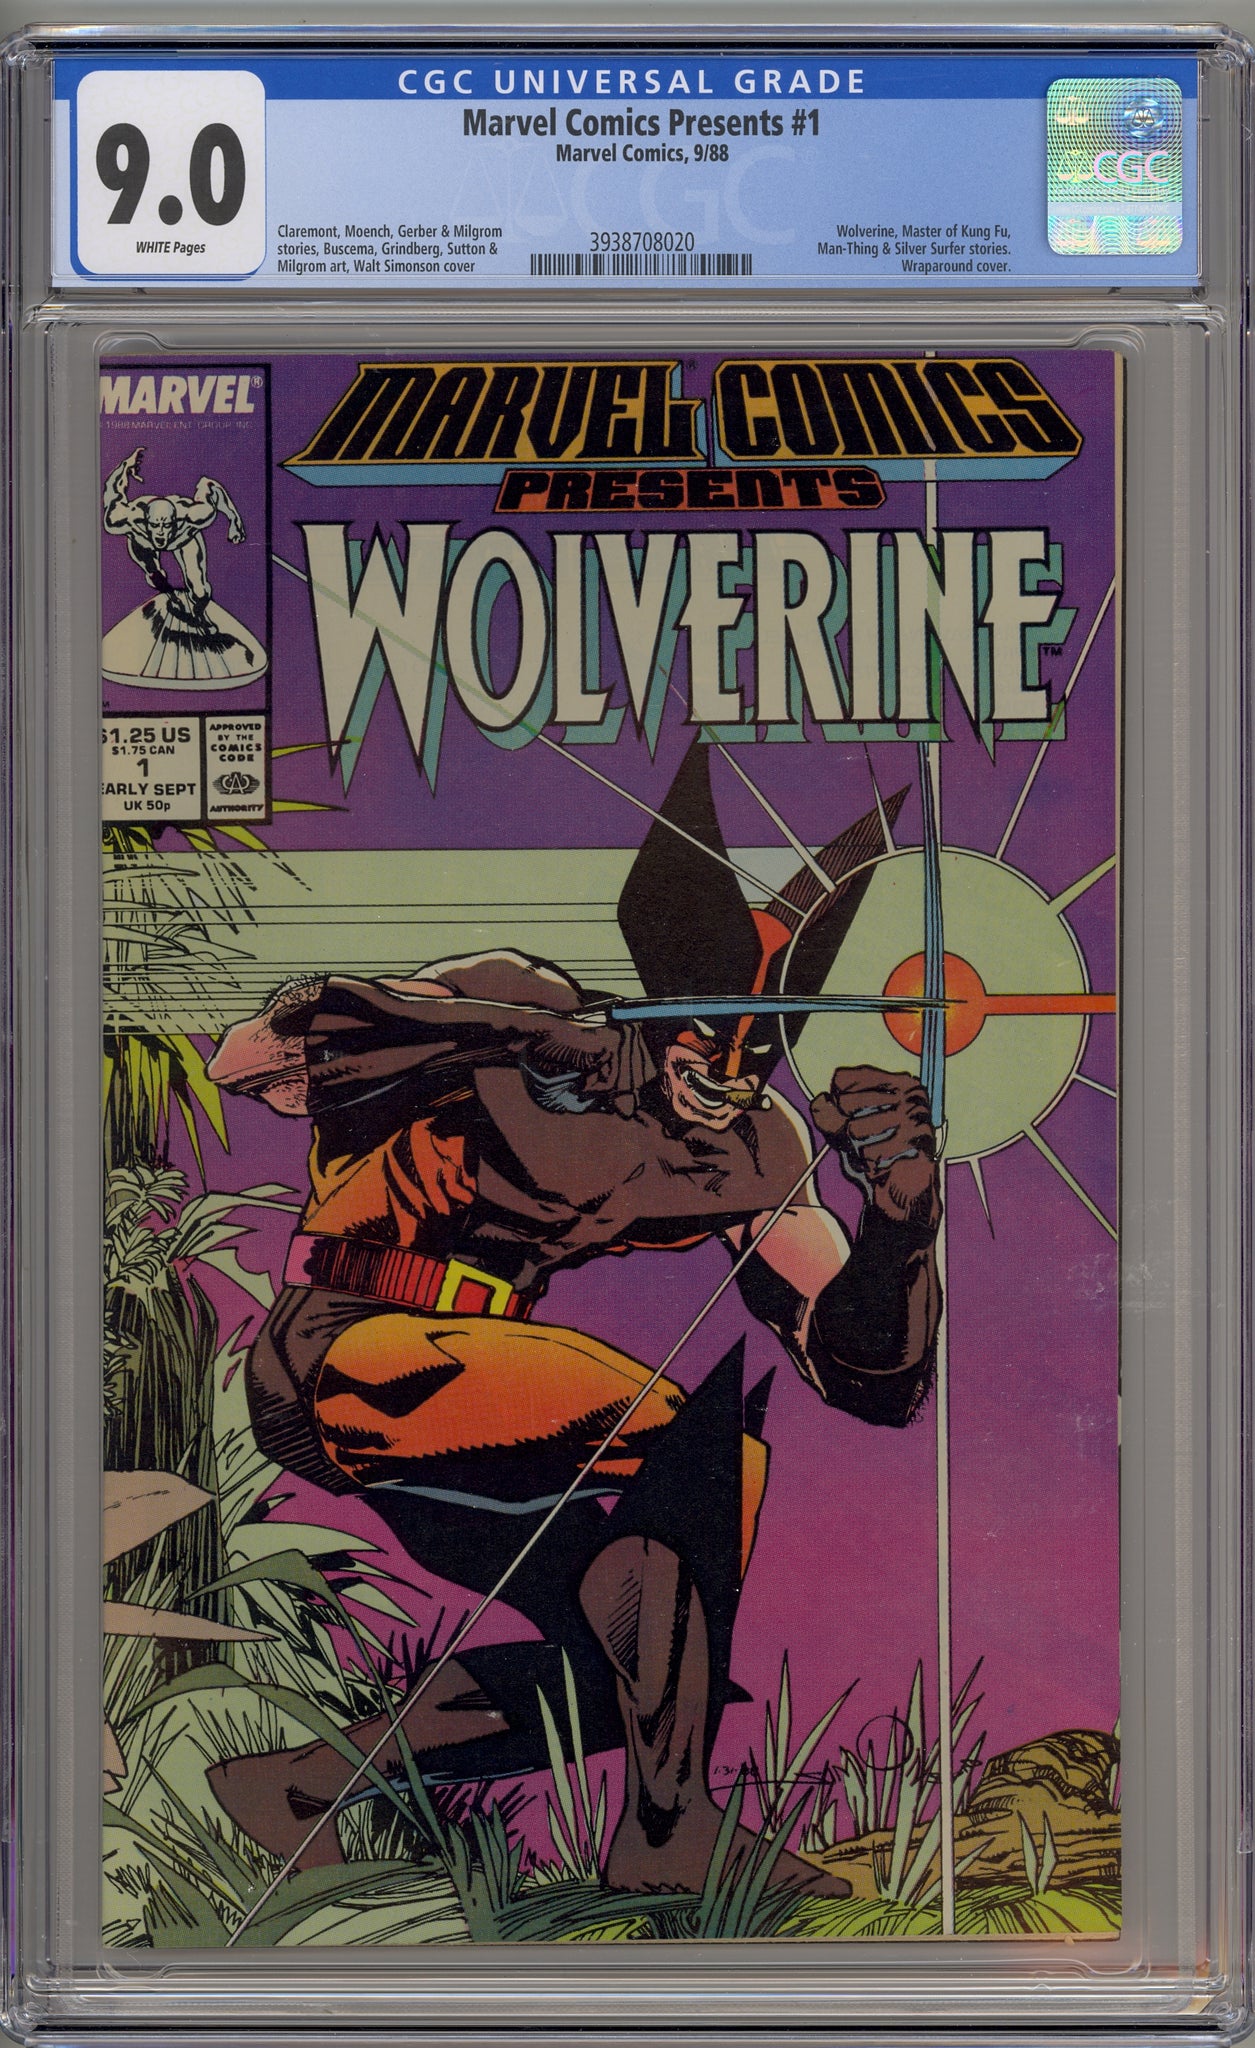 Marvel Comics Presents #1 (1988) Wolverine